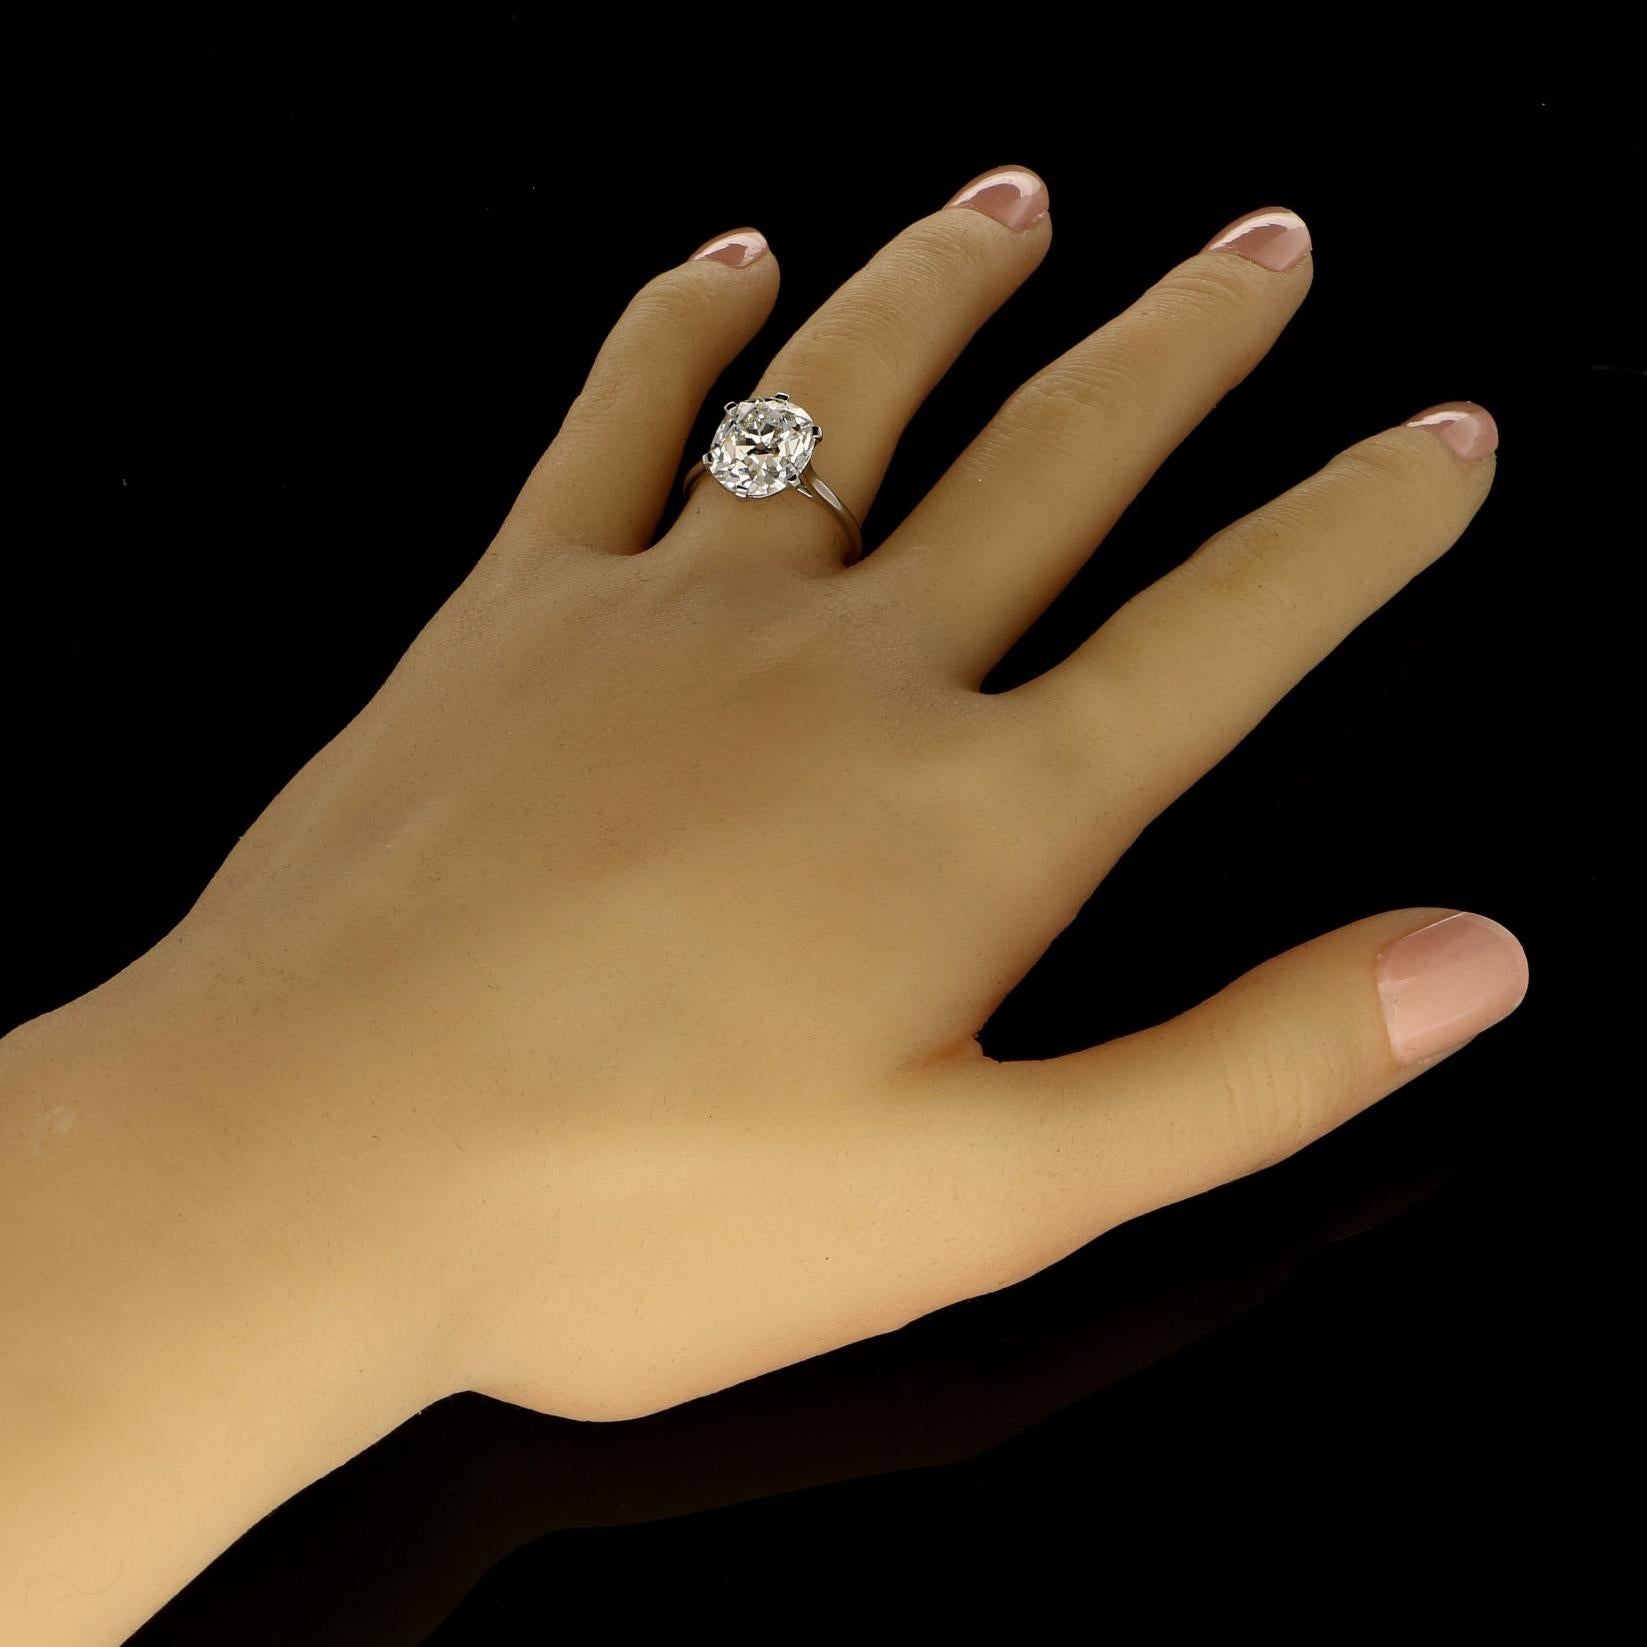 Women's or Men's Cartier Diamond Solitaire Ring with a 6.06 Carat Old Mine Brilliant Cut Diamonds